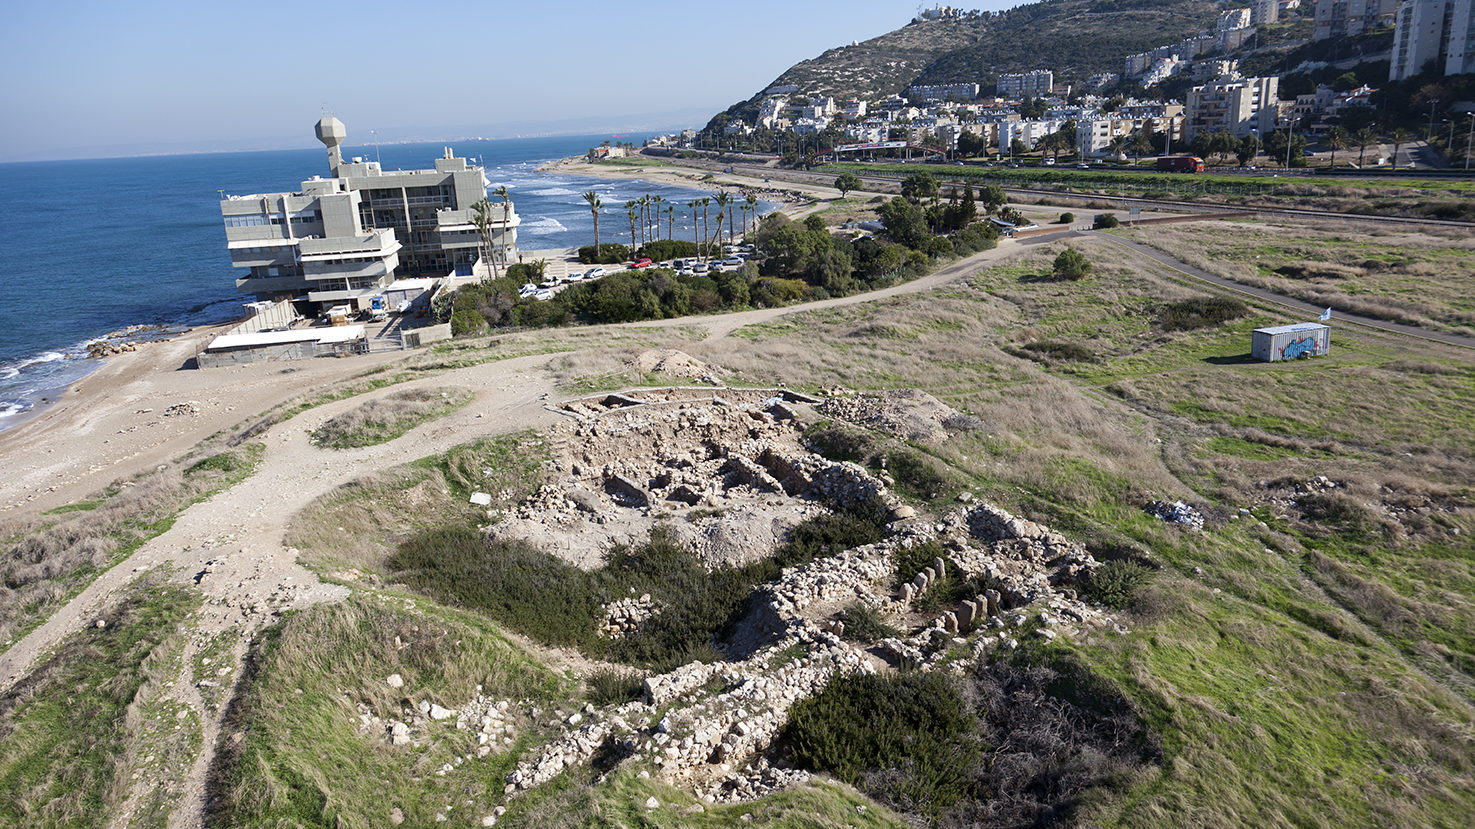 Ancient Pottery Indicates Site Where Phoenicians Prepared Rare Color